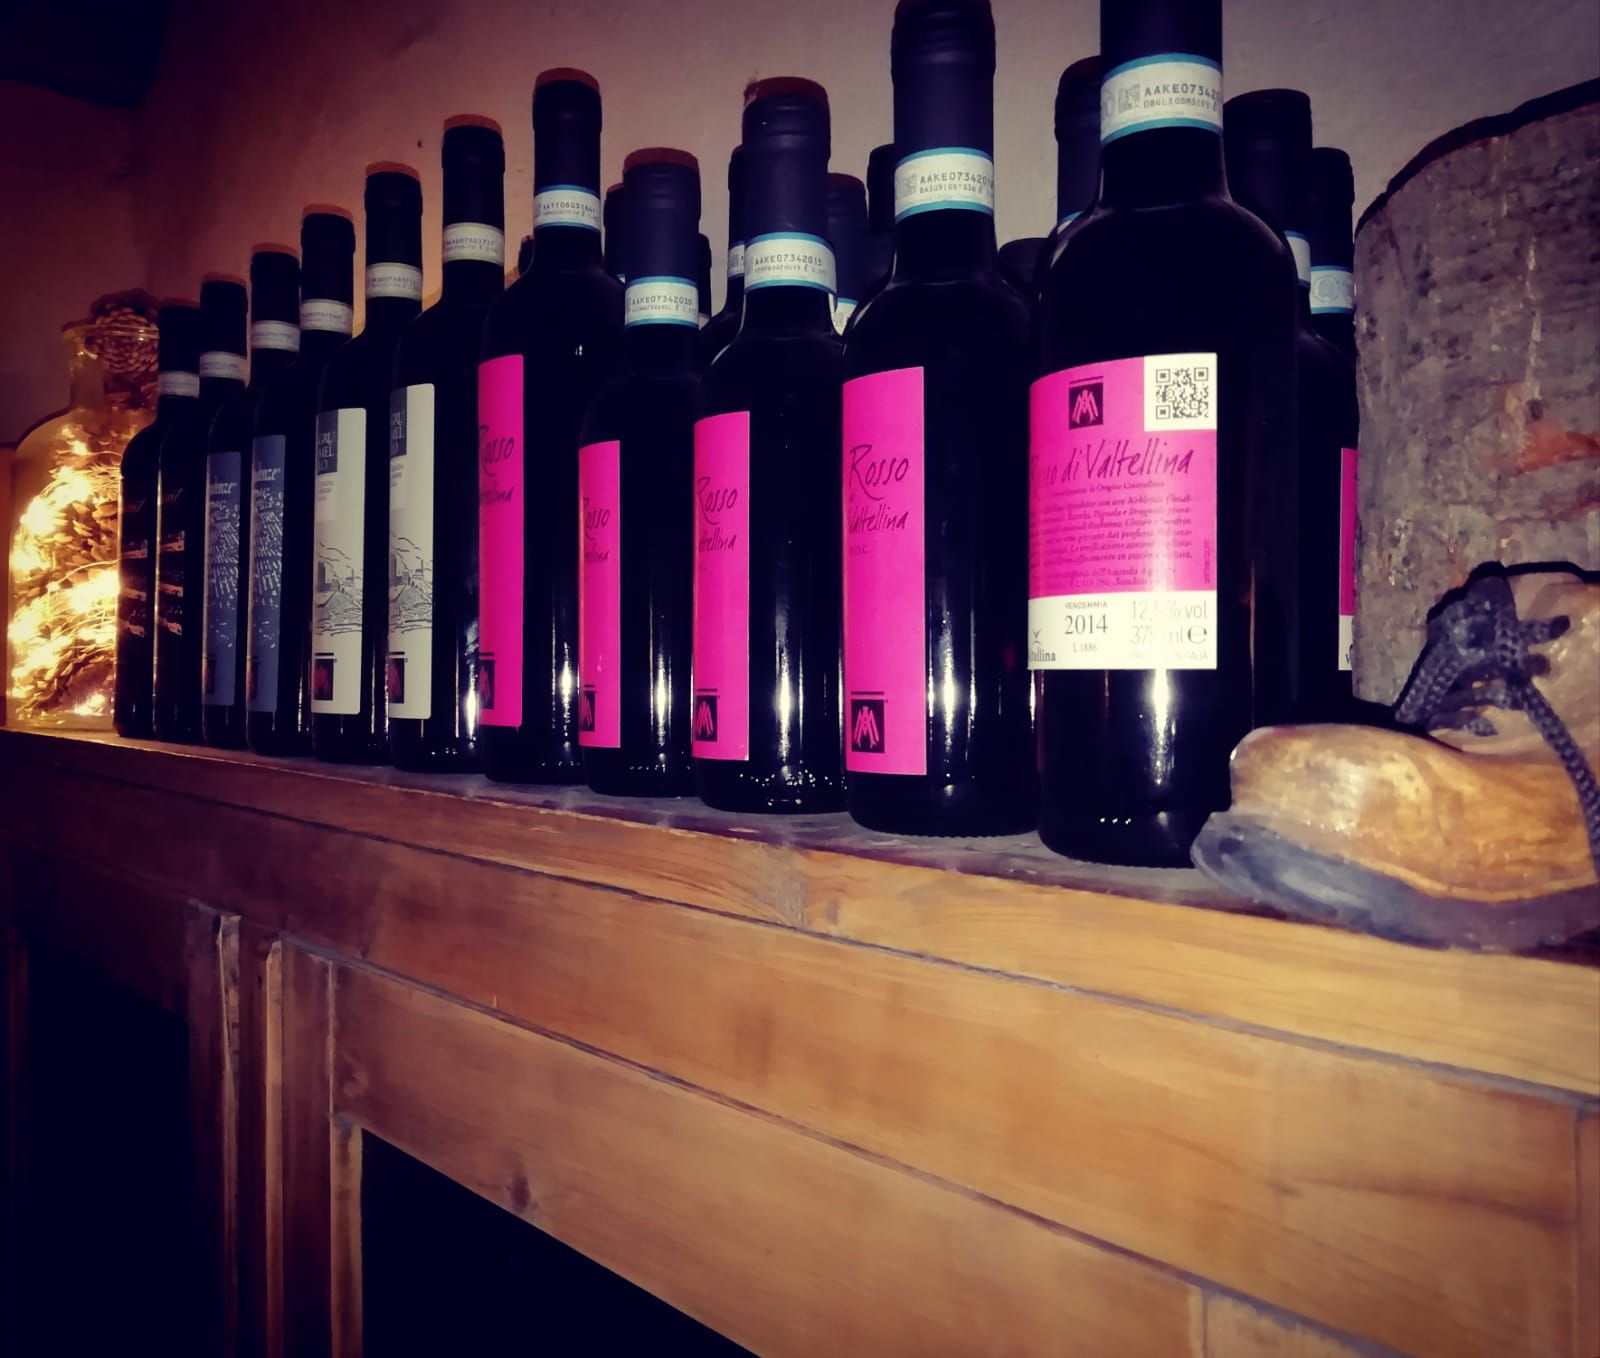 Valtellina wines